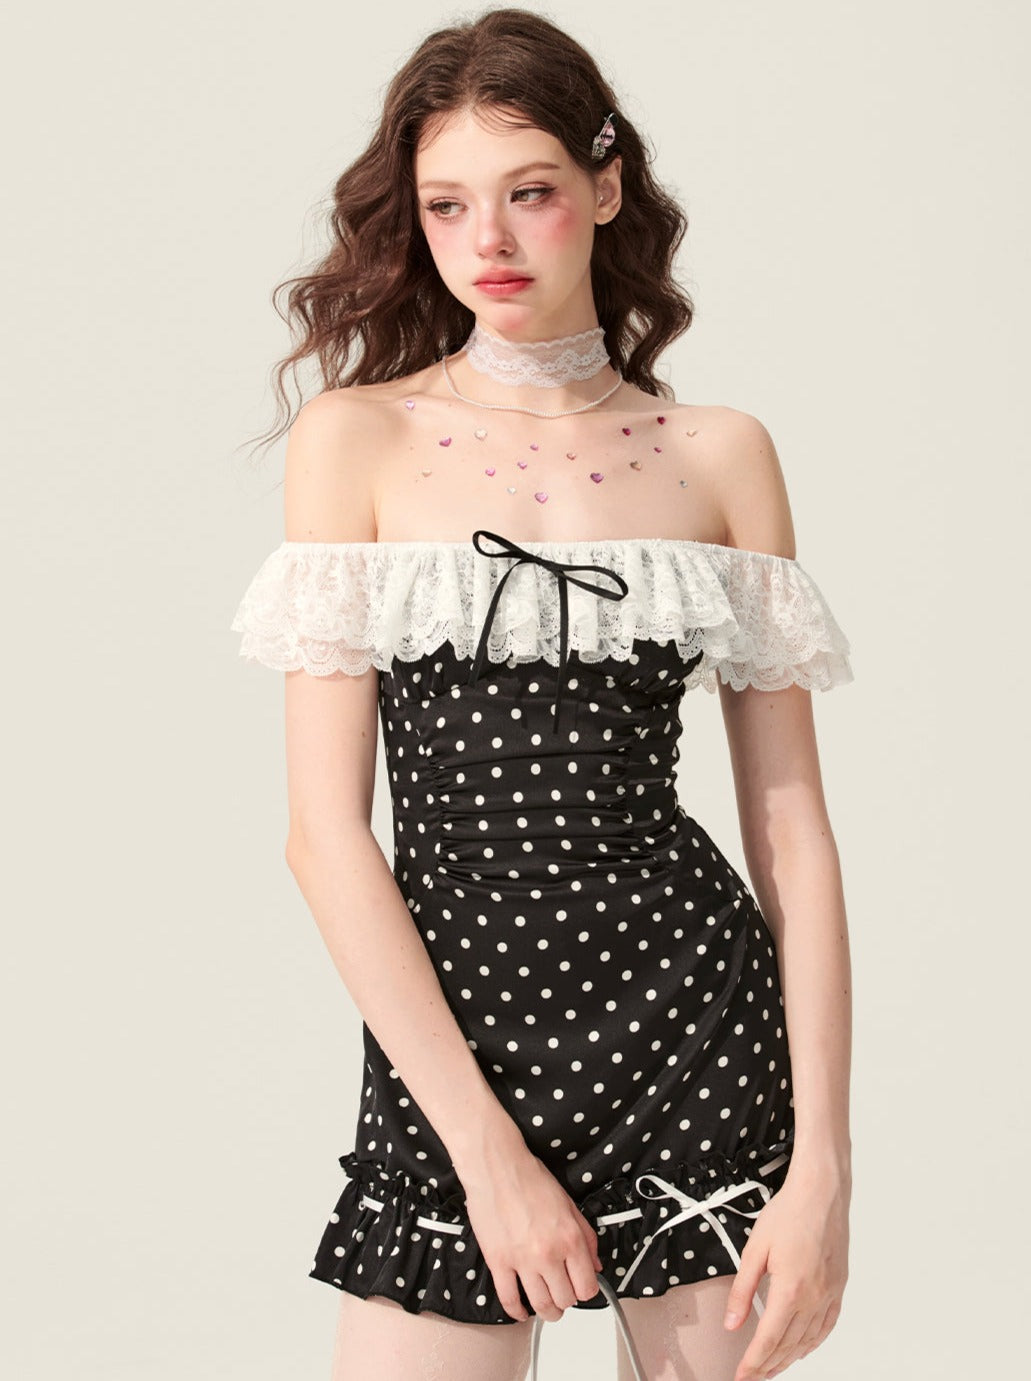 [En vente le 31 mai à 20 heures] less eyes black mulberry berry one-word shoulder polka dot black dress lace